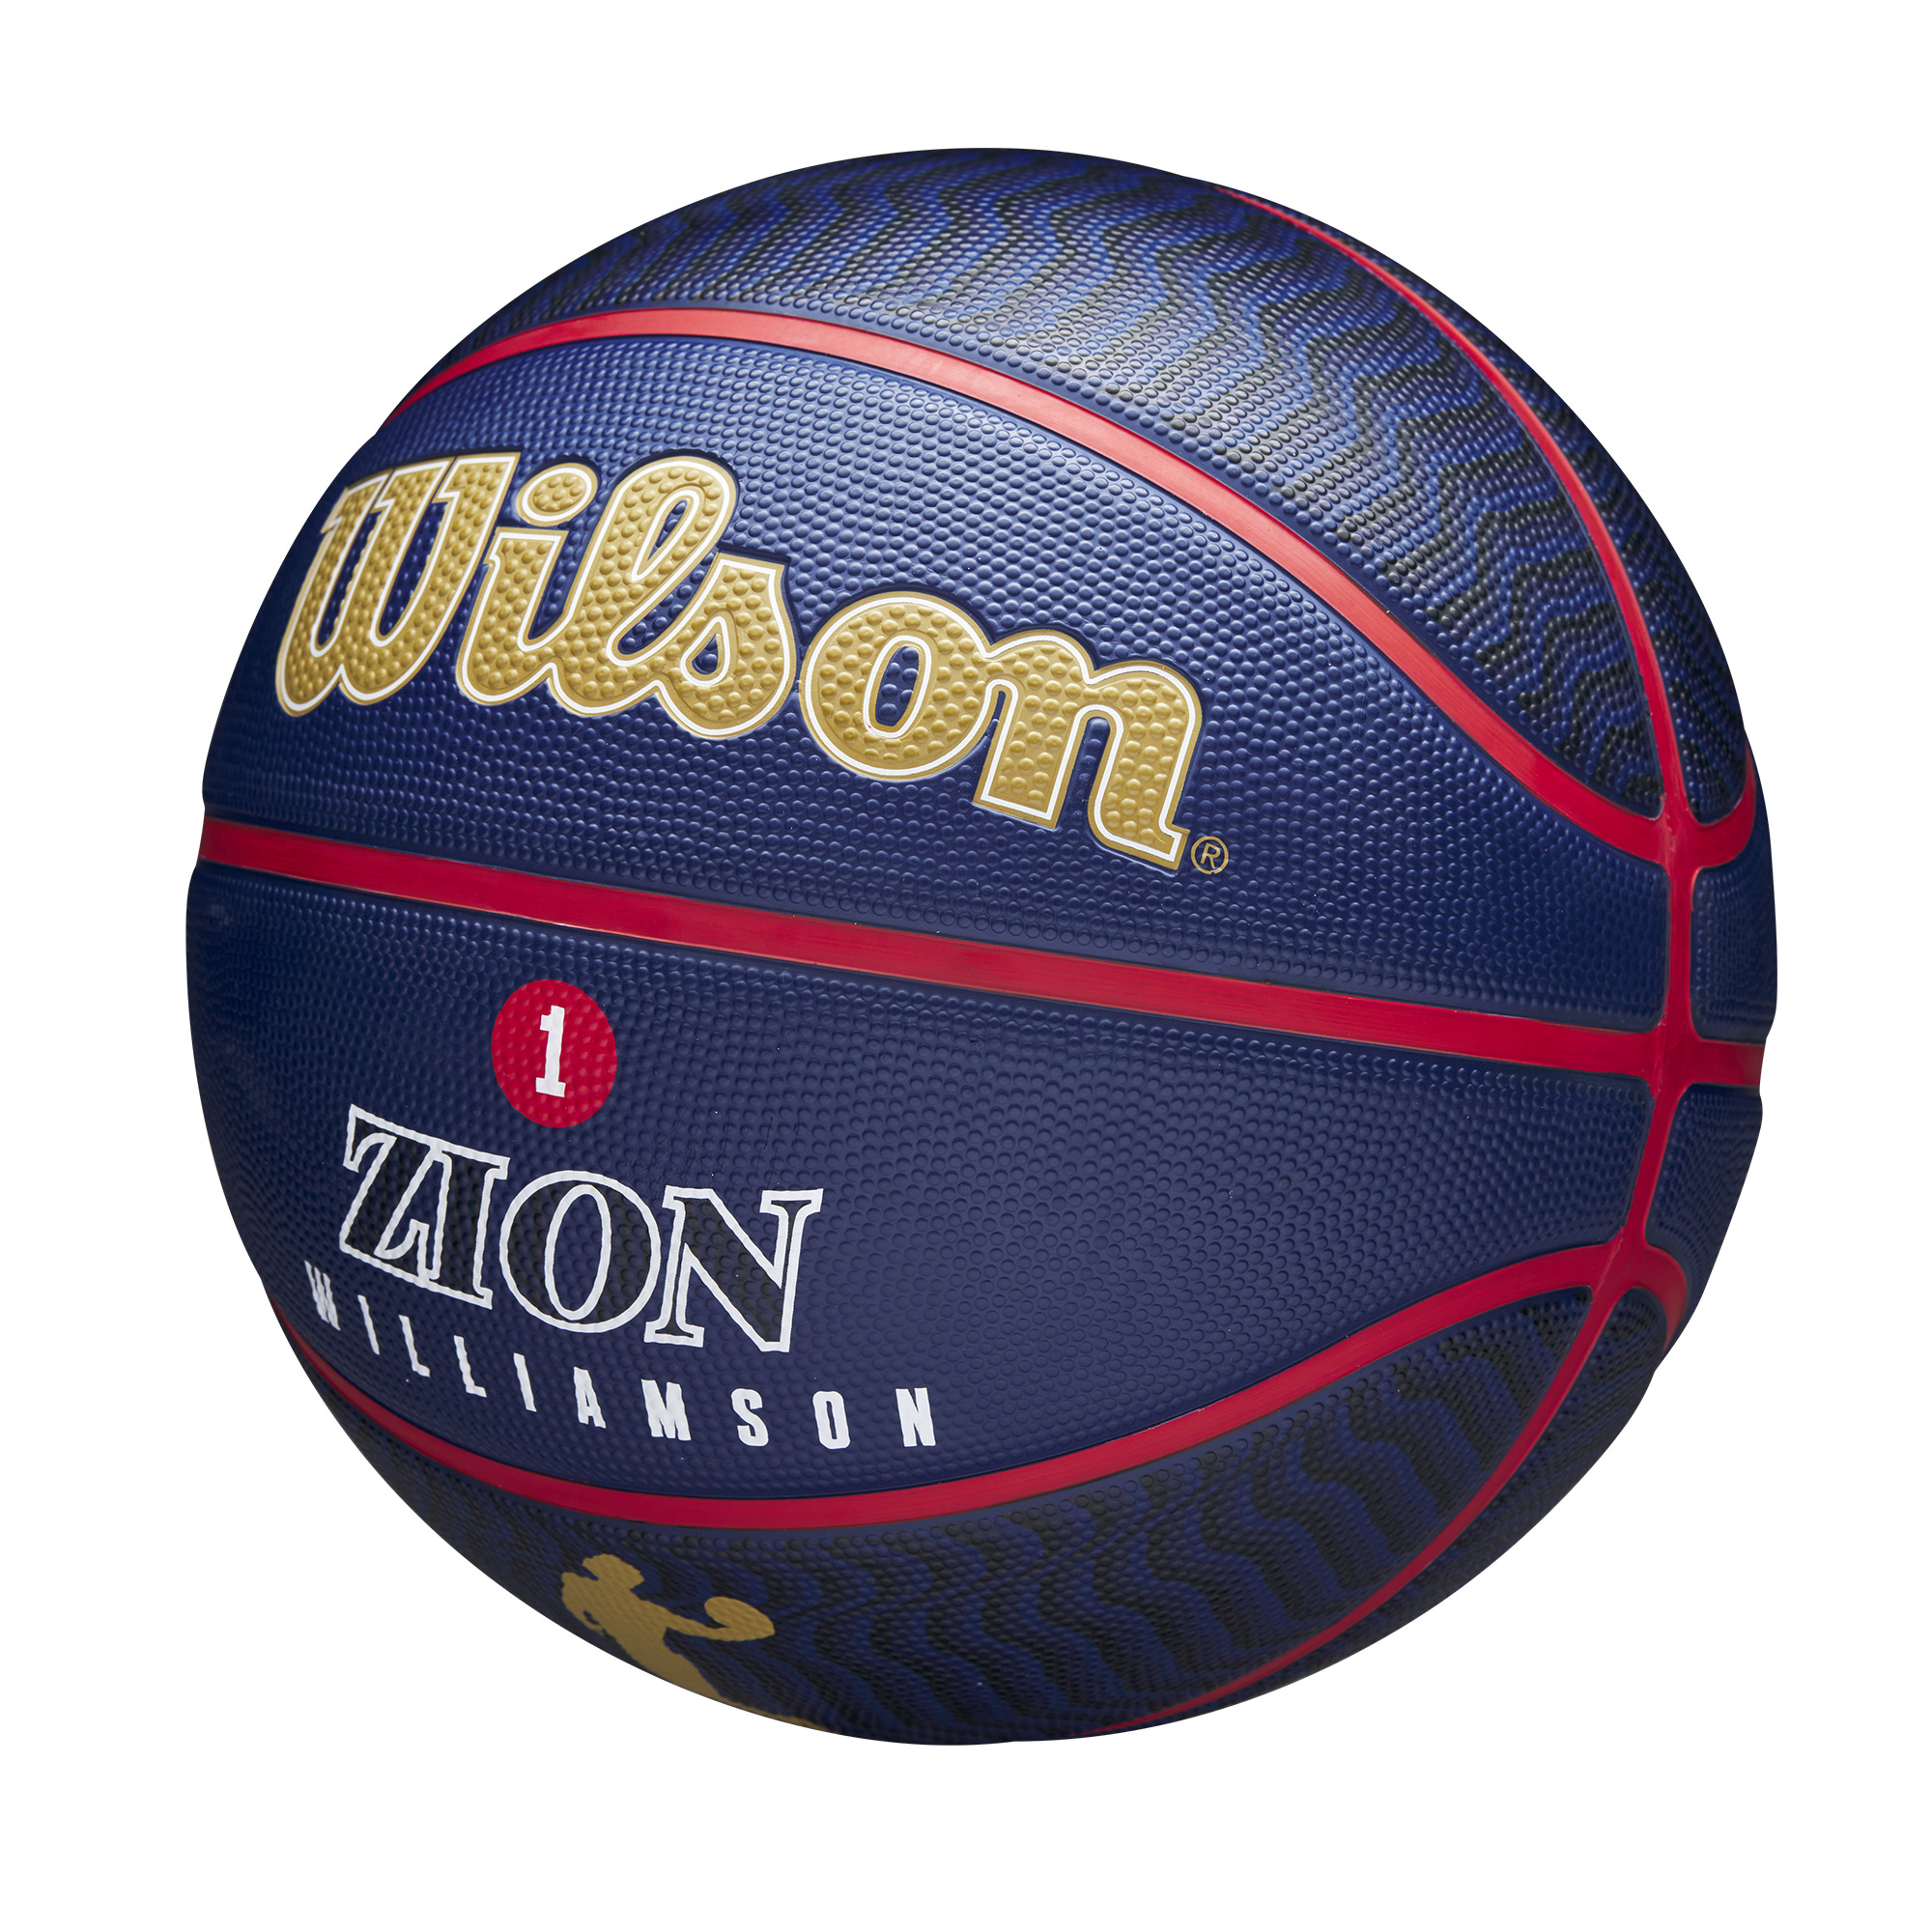 Ballons de basket NBA Player Zion Williamson